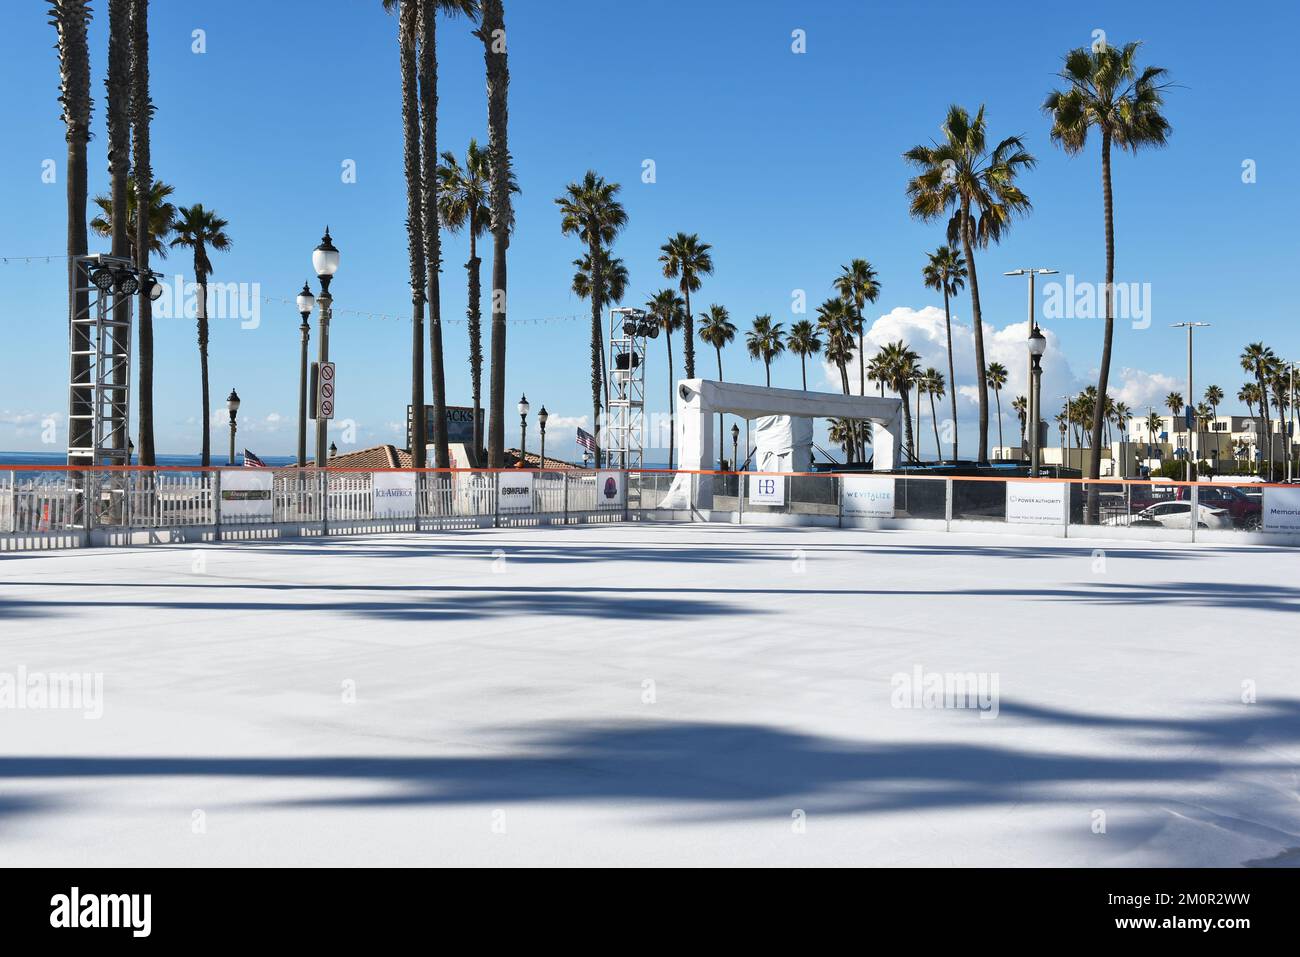 HUNTINGTON BEACH, CALIFORNIA - 7 DEC 2022: Seasonal Ice Rink at the Huntington Beach Pier Plaza. Stock Photo